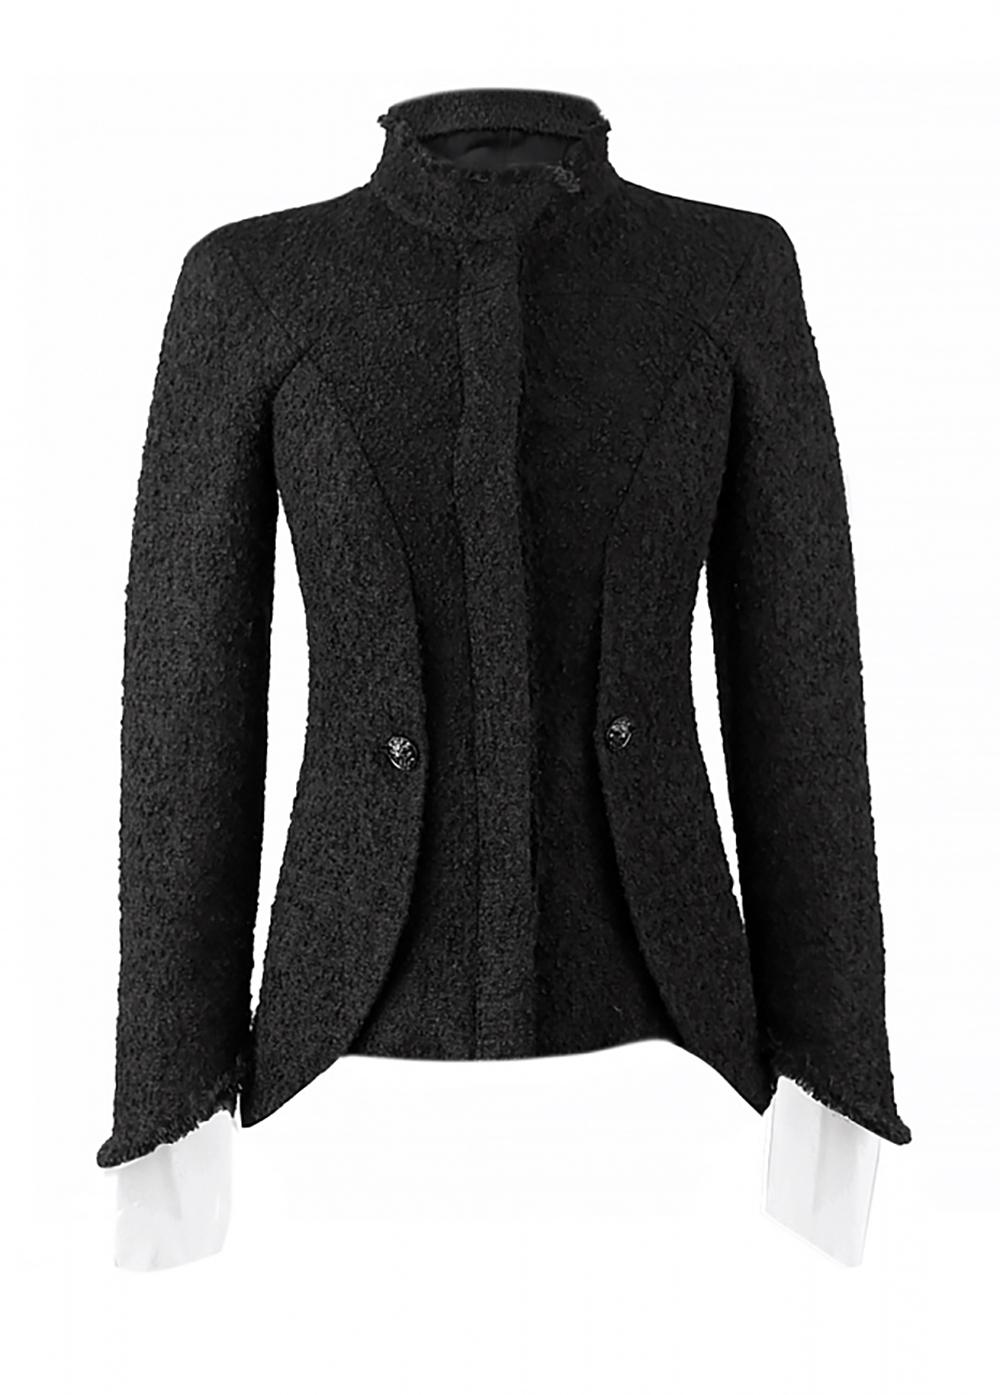 Women's or Men's Chanel New Little Black Tweed Jacket